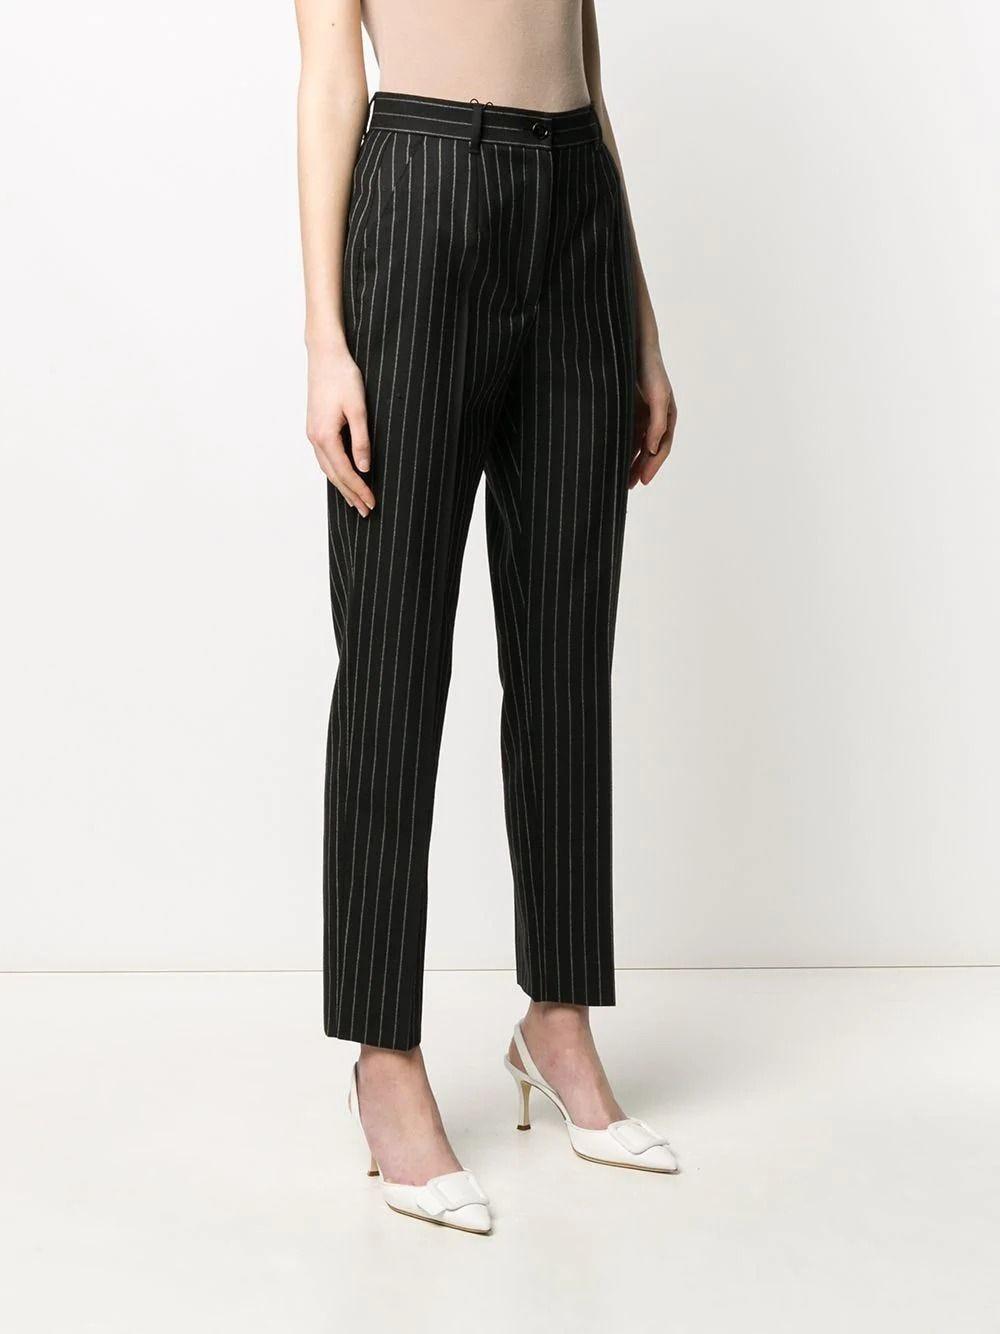 Dolce & Gabbana Velvet Pinstripe Woolen Pants in Black - Lyst